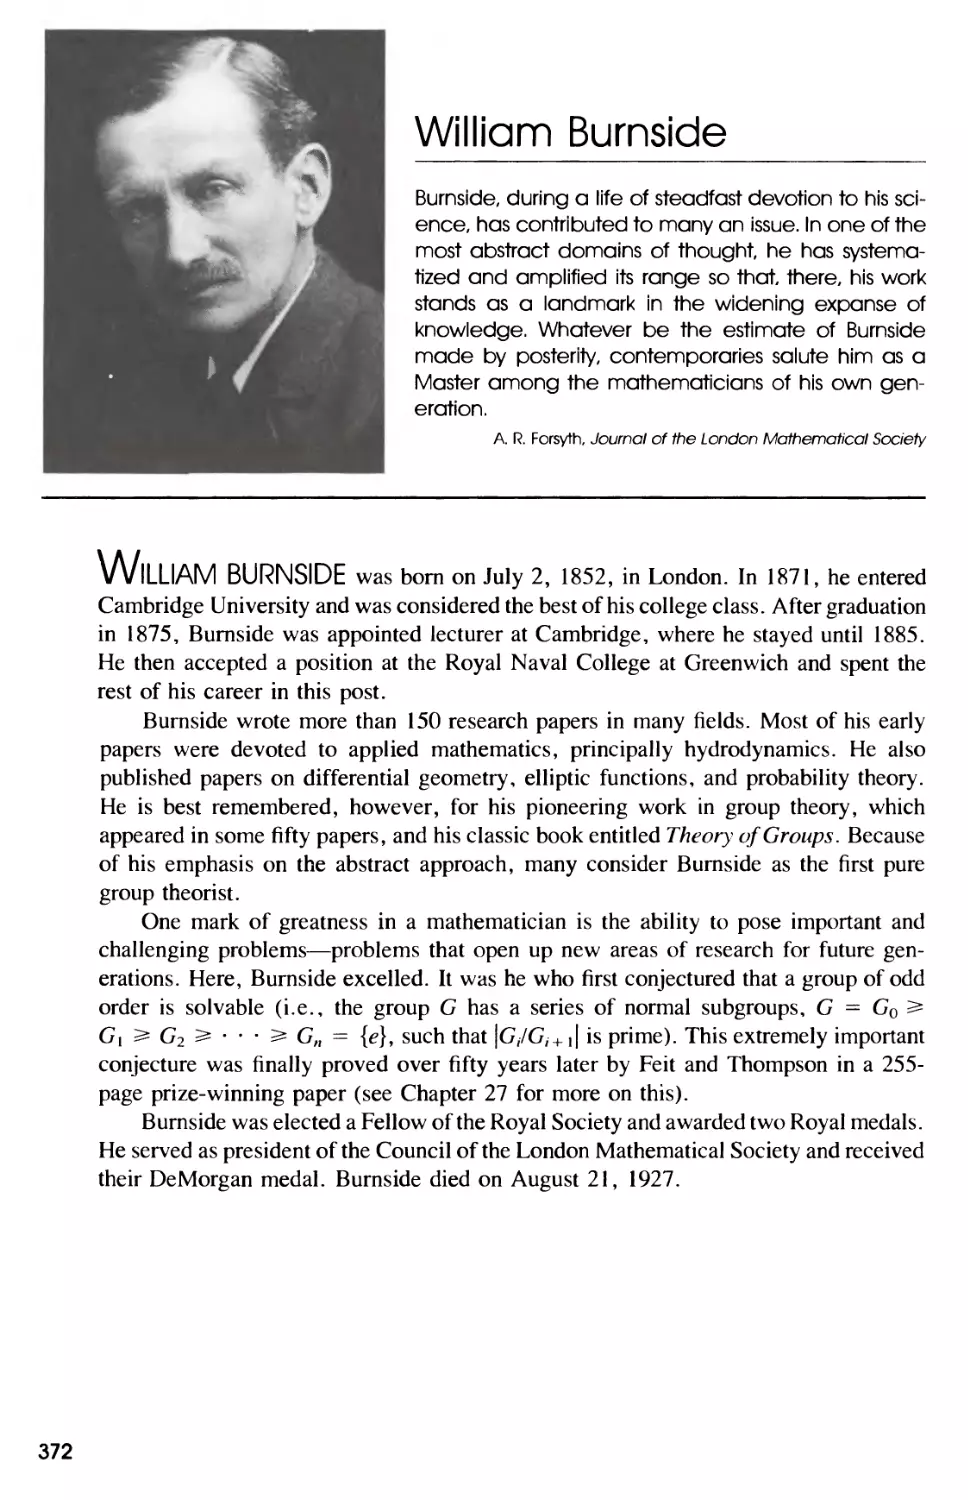 Biography of William Burnside